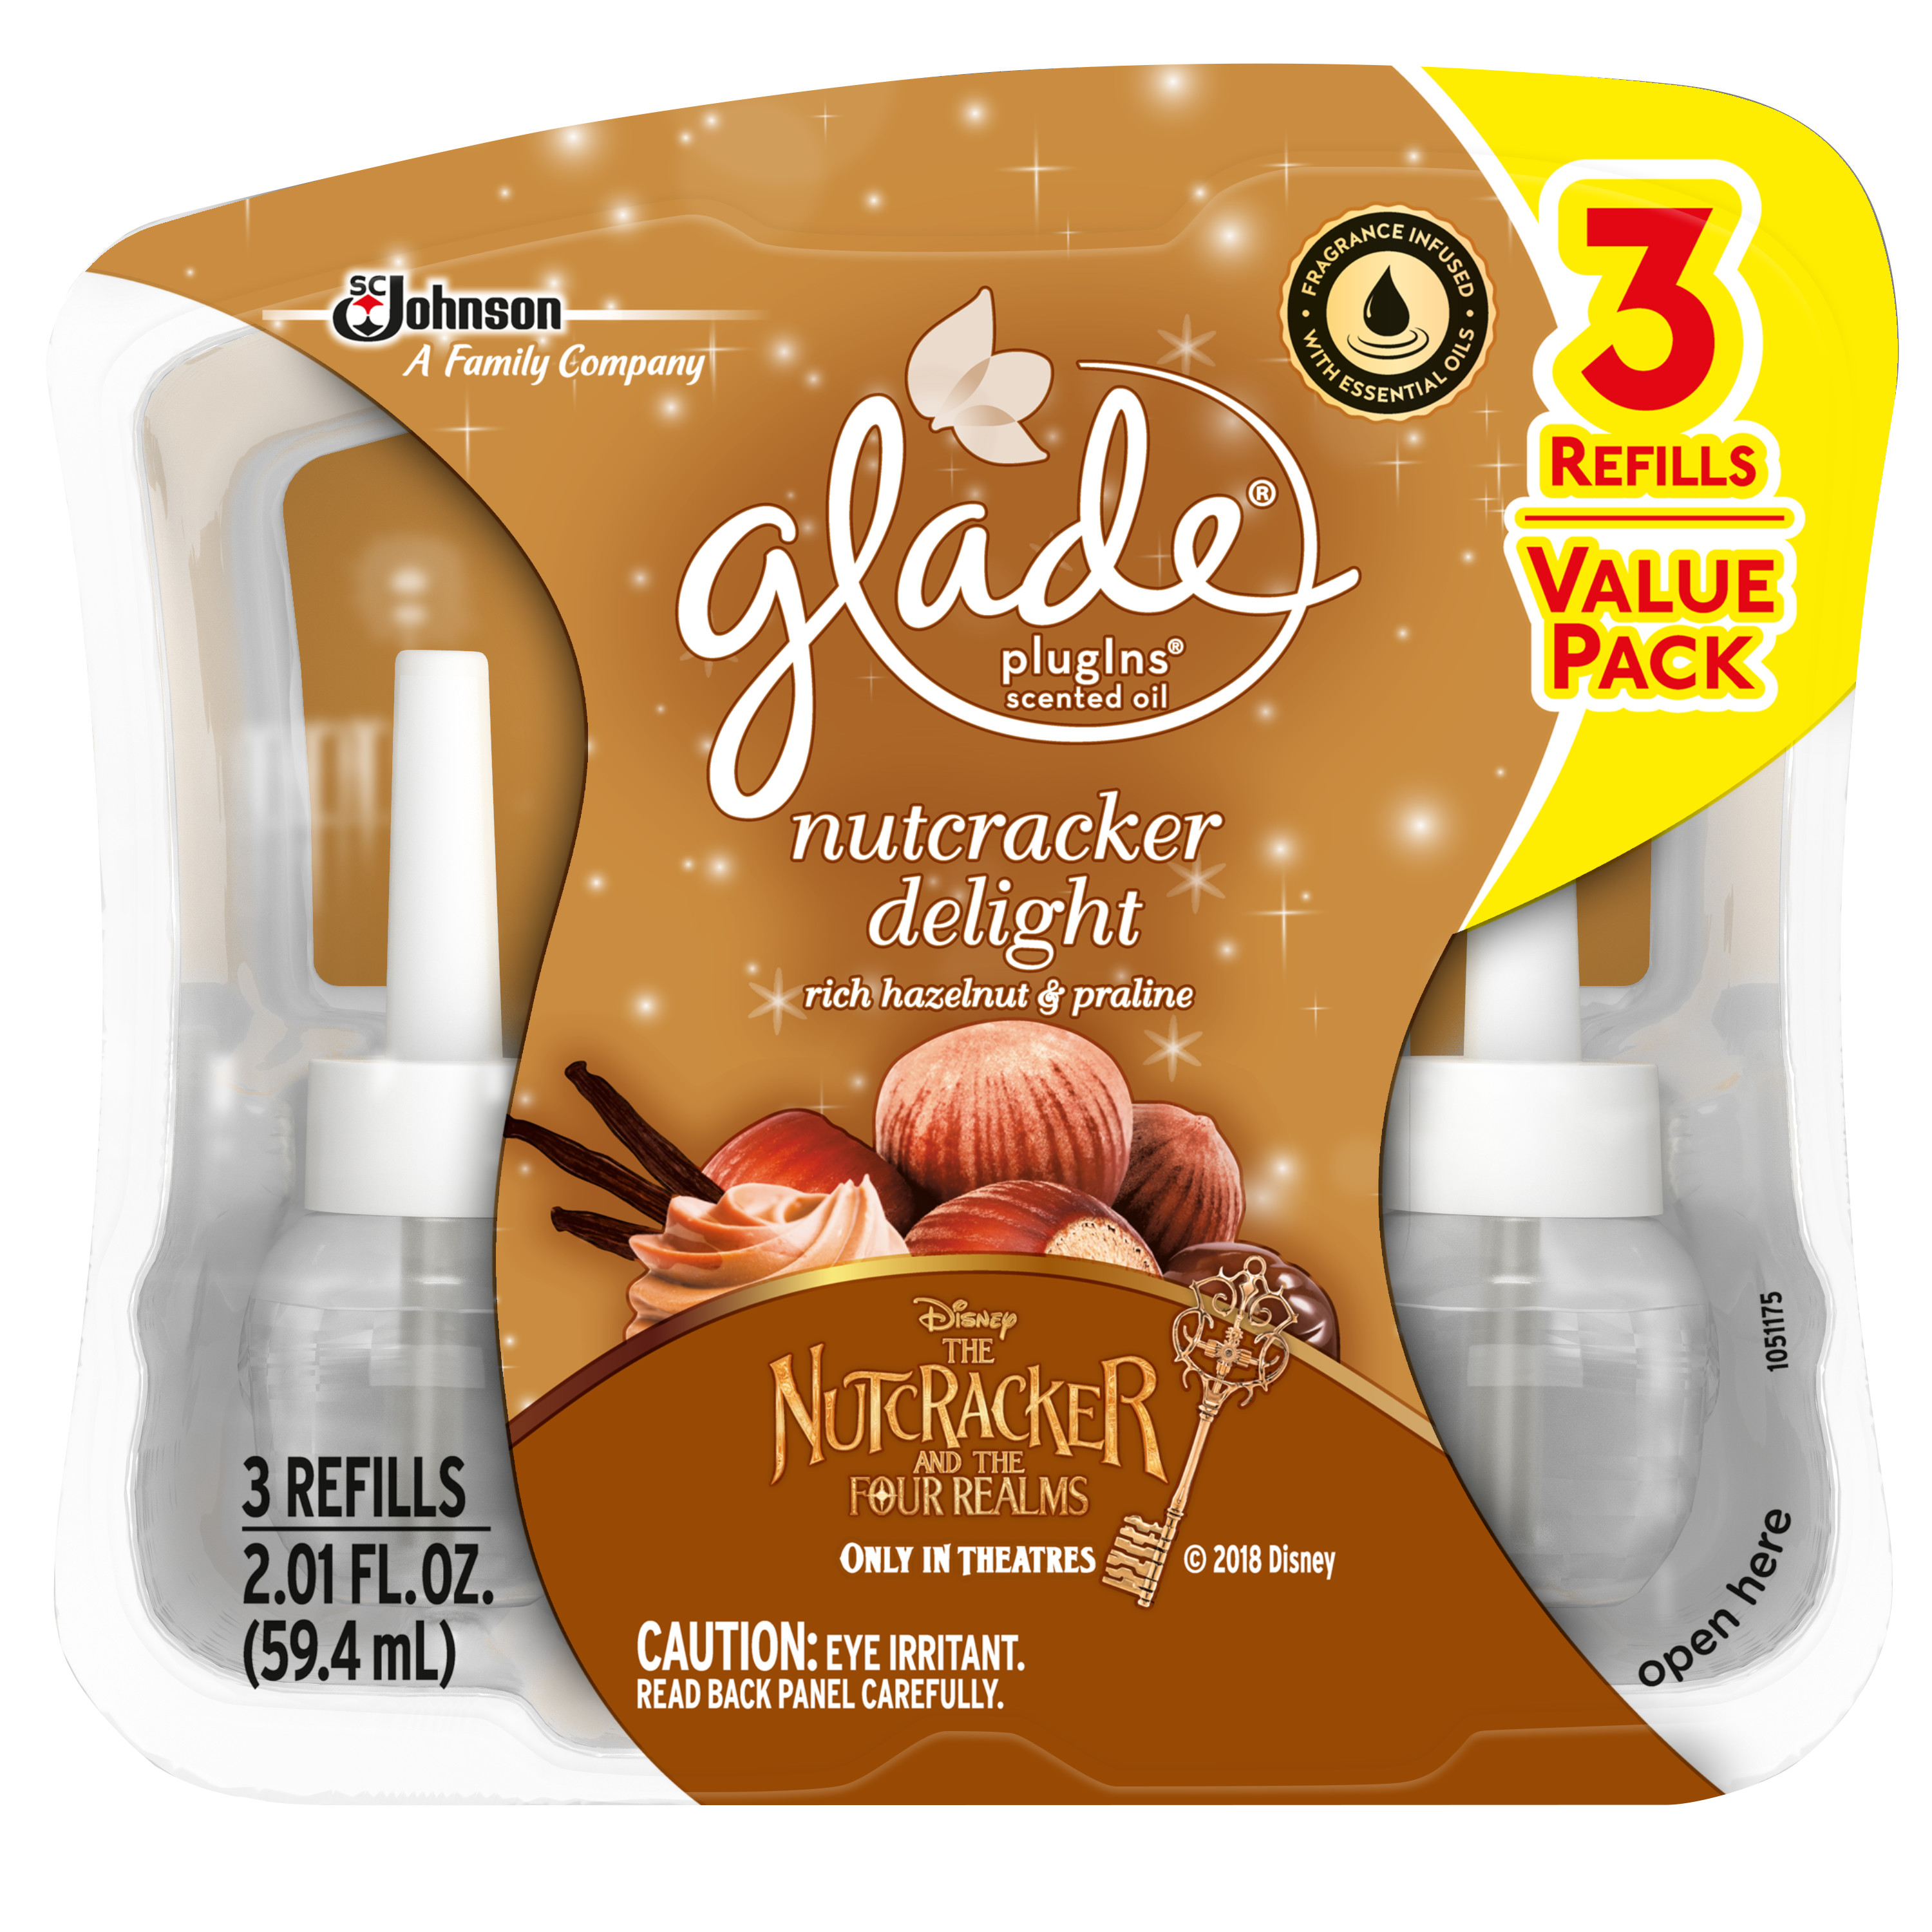 Glade PlugIns Scented Oil Air Freshener Refill, Nutcracker Delight, 3 refills, 2.01 fl oz - image 1 of 7